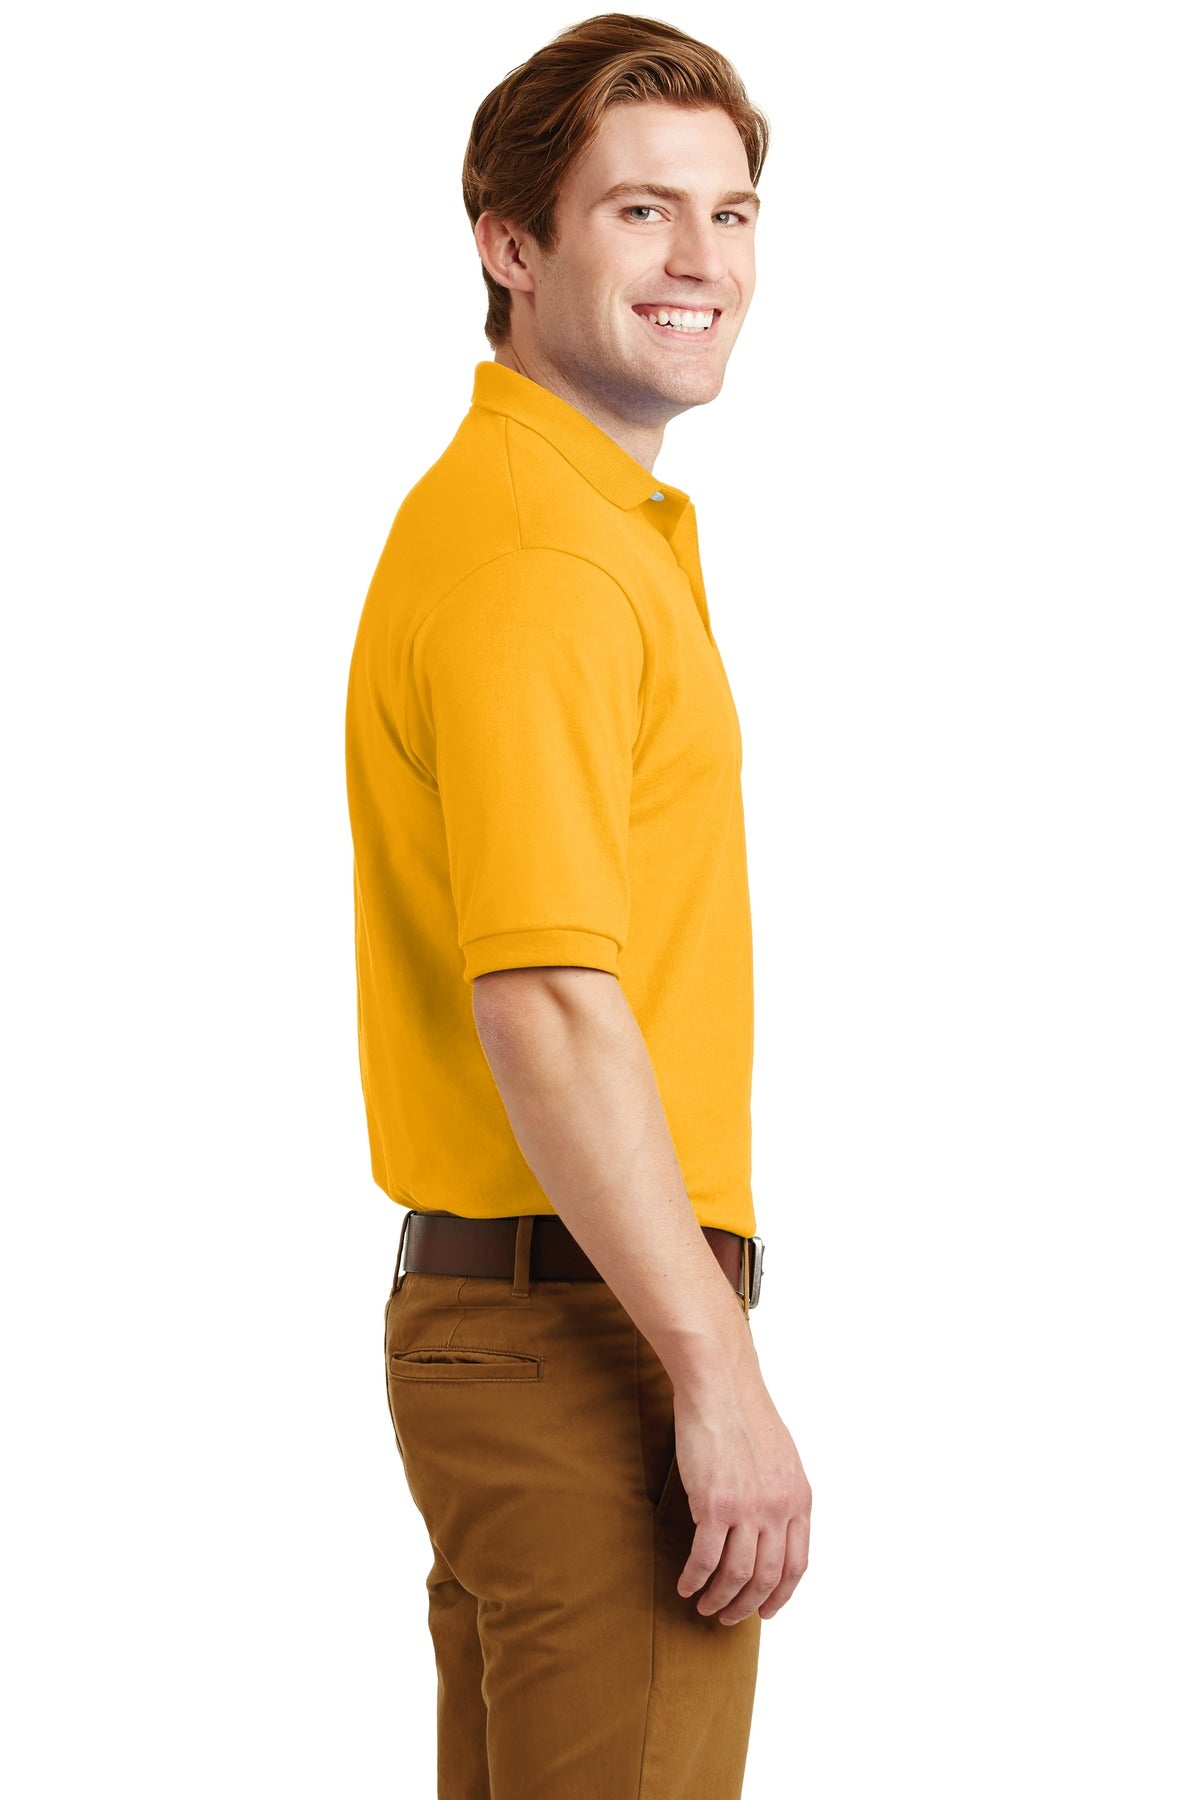 JERZEES® - SpotShield™ 5.4-Ounce Jersey Knit Sport Shirt. 437M [Gold] - DFW Impression